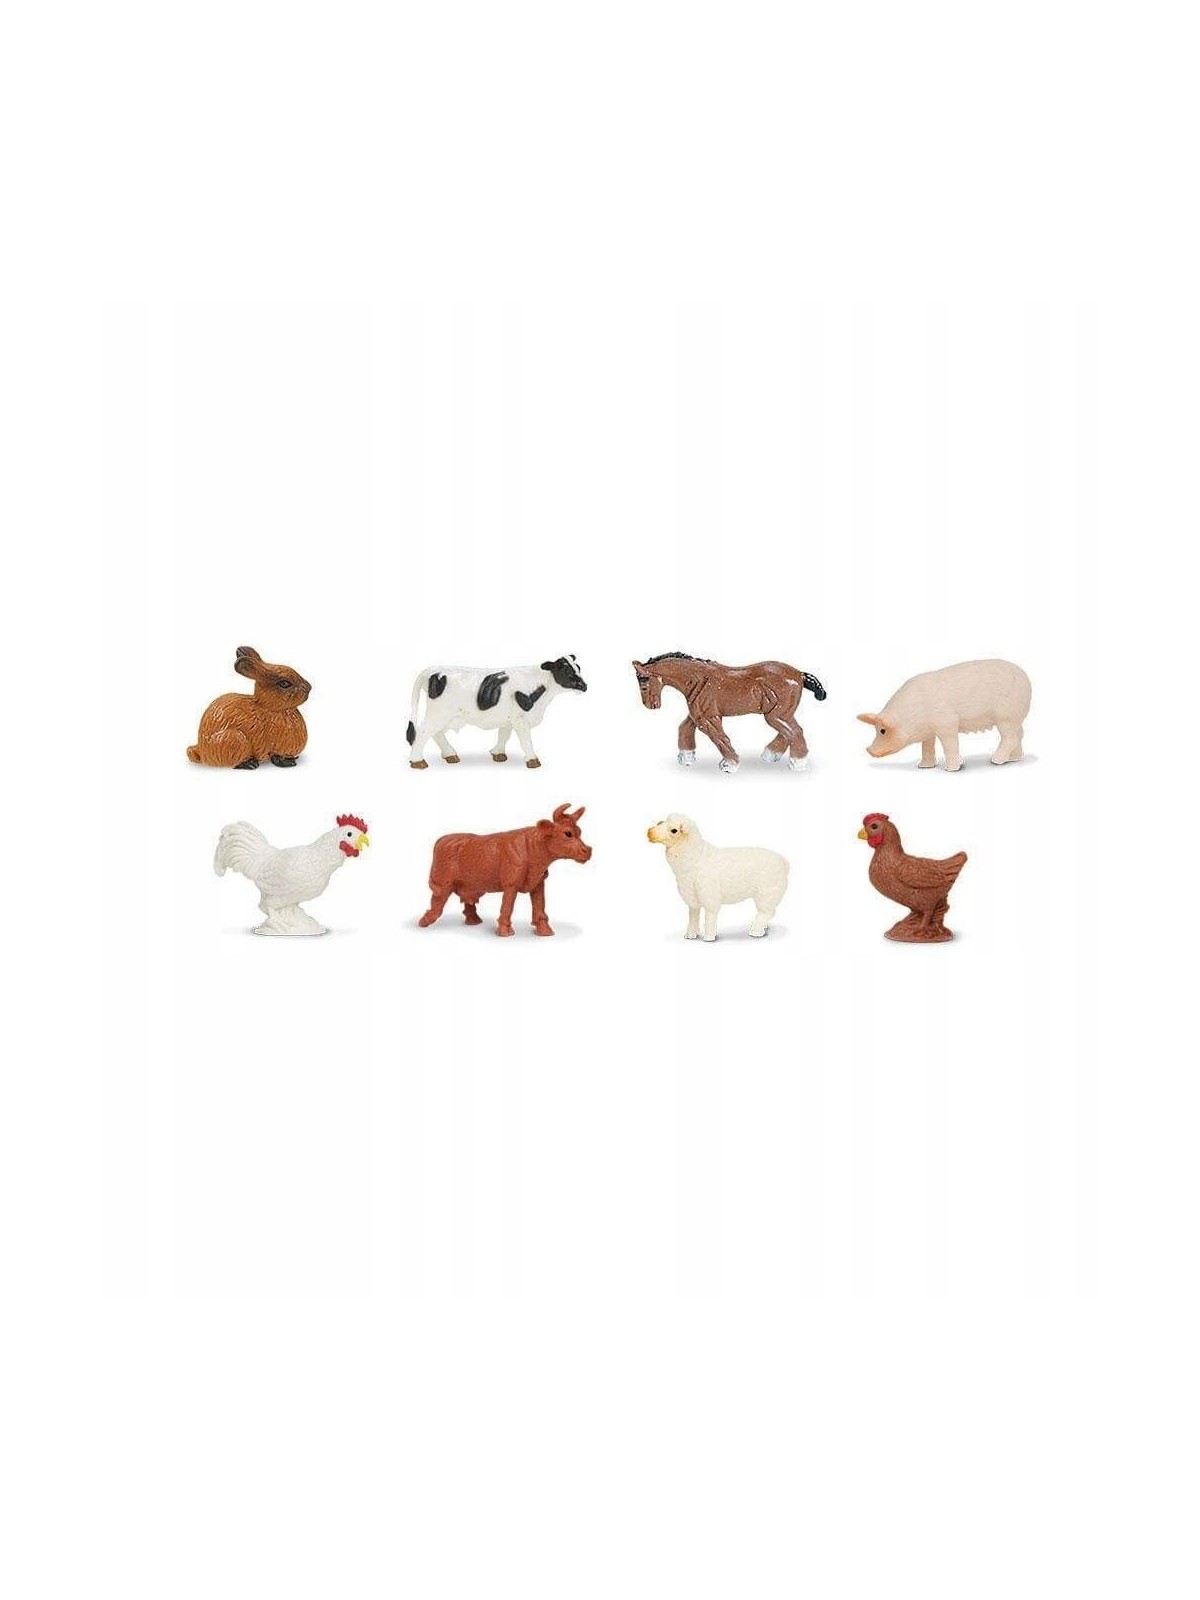 Figurines mini animaux du désert - Safari Ltd® 100255